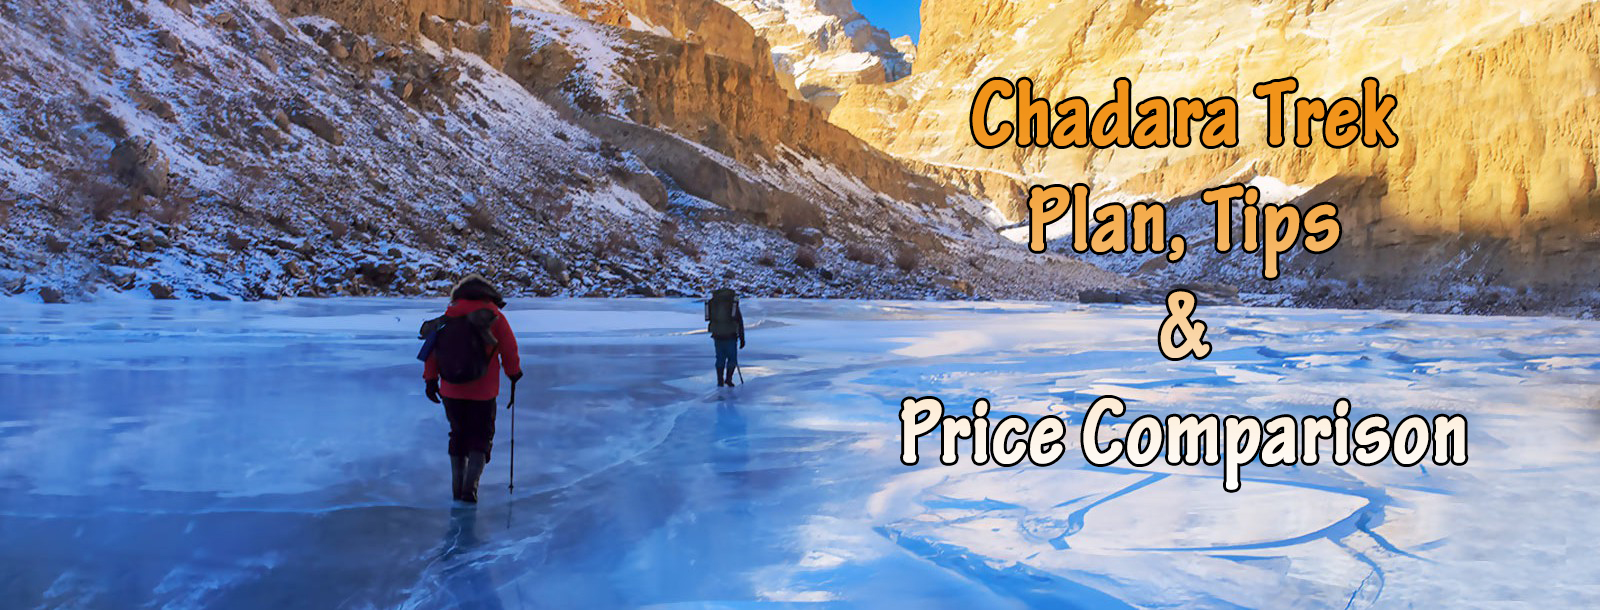 chadar trek plan tips price comparison